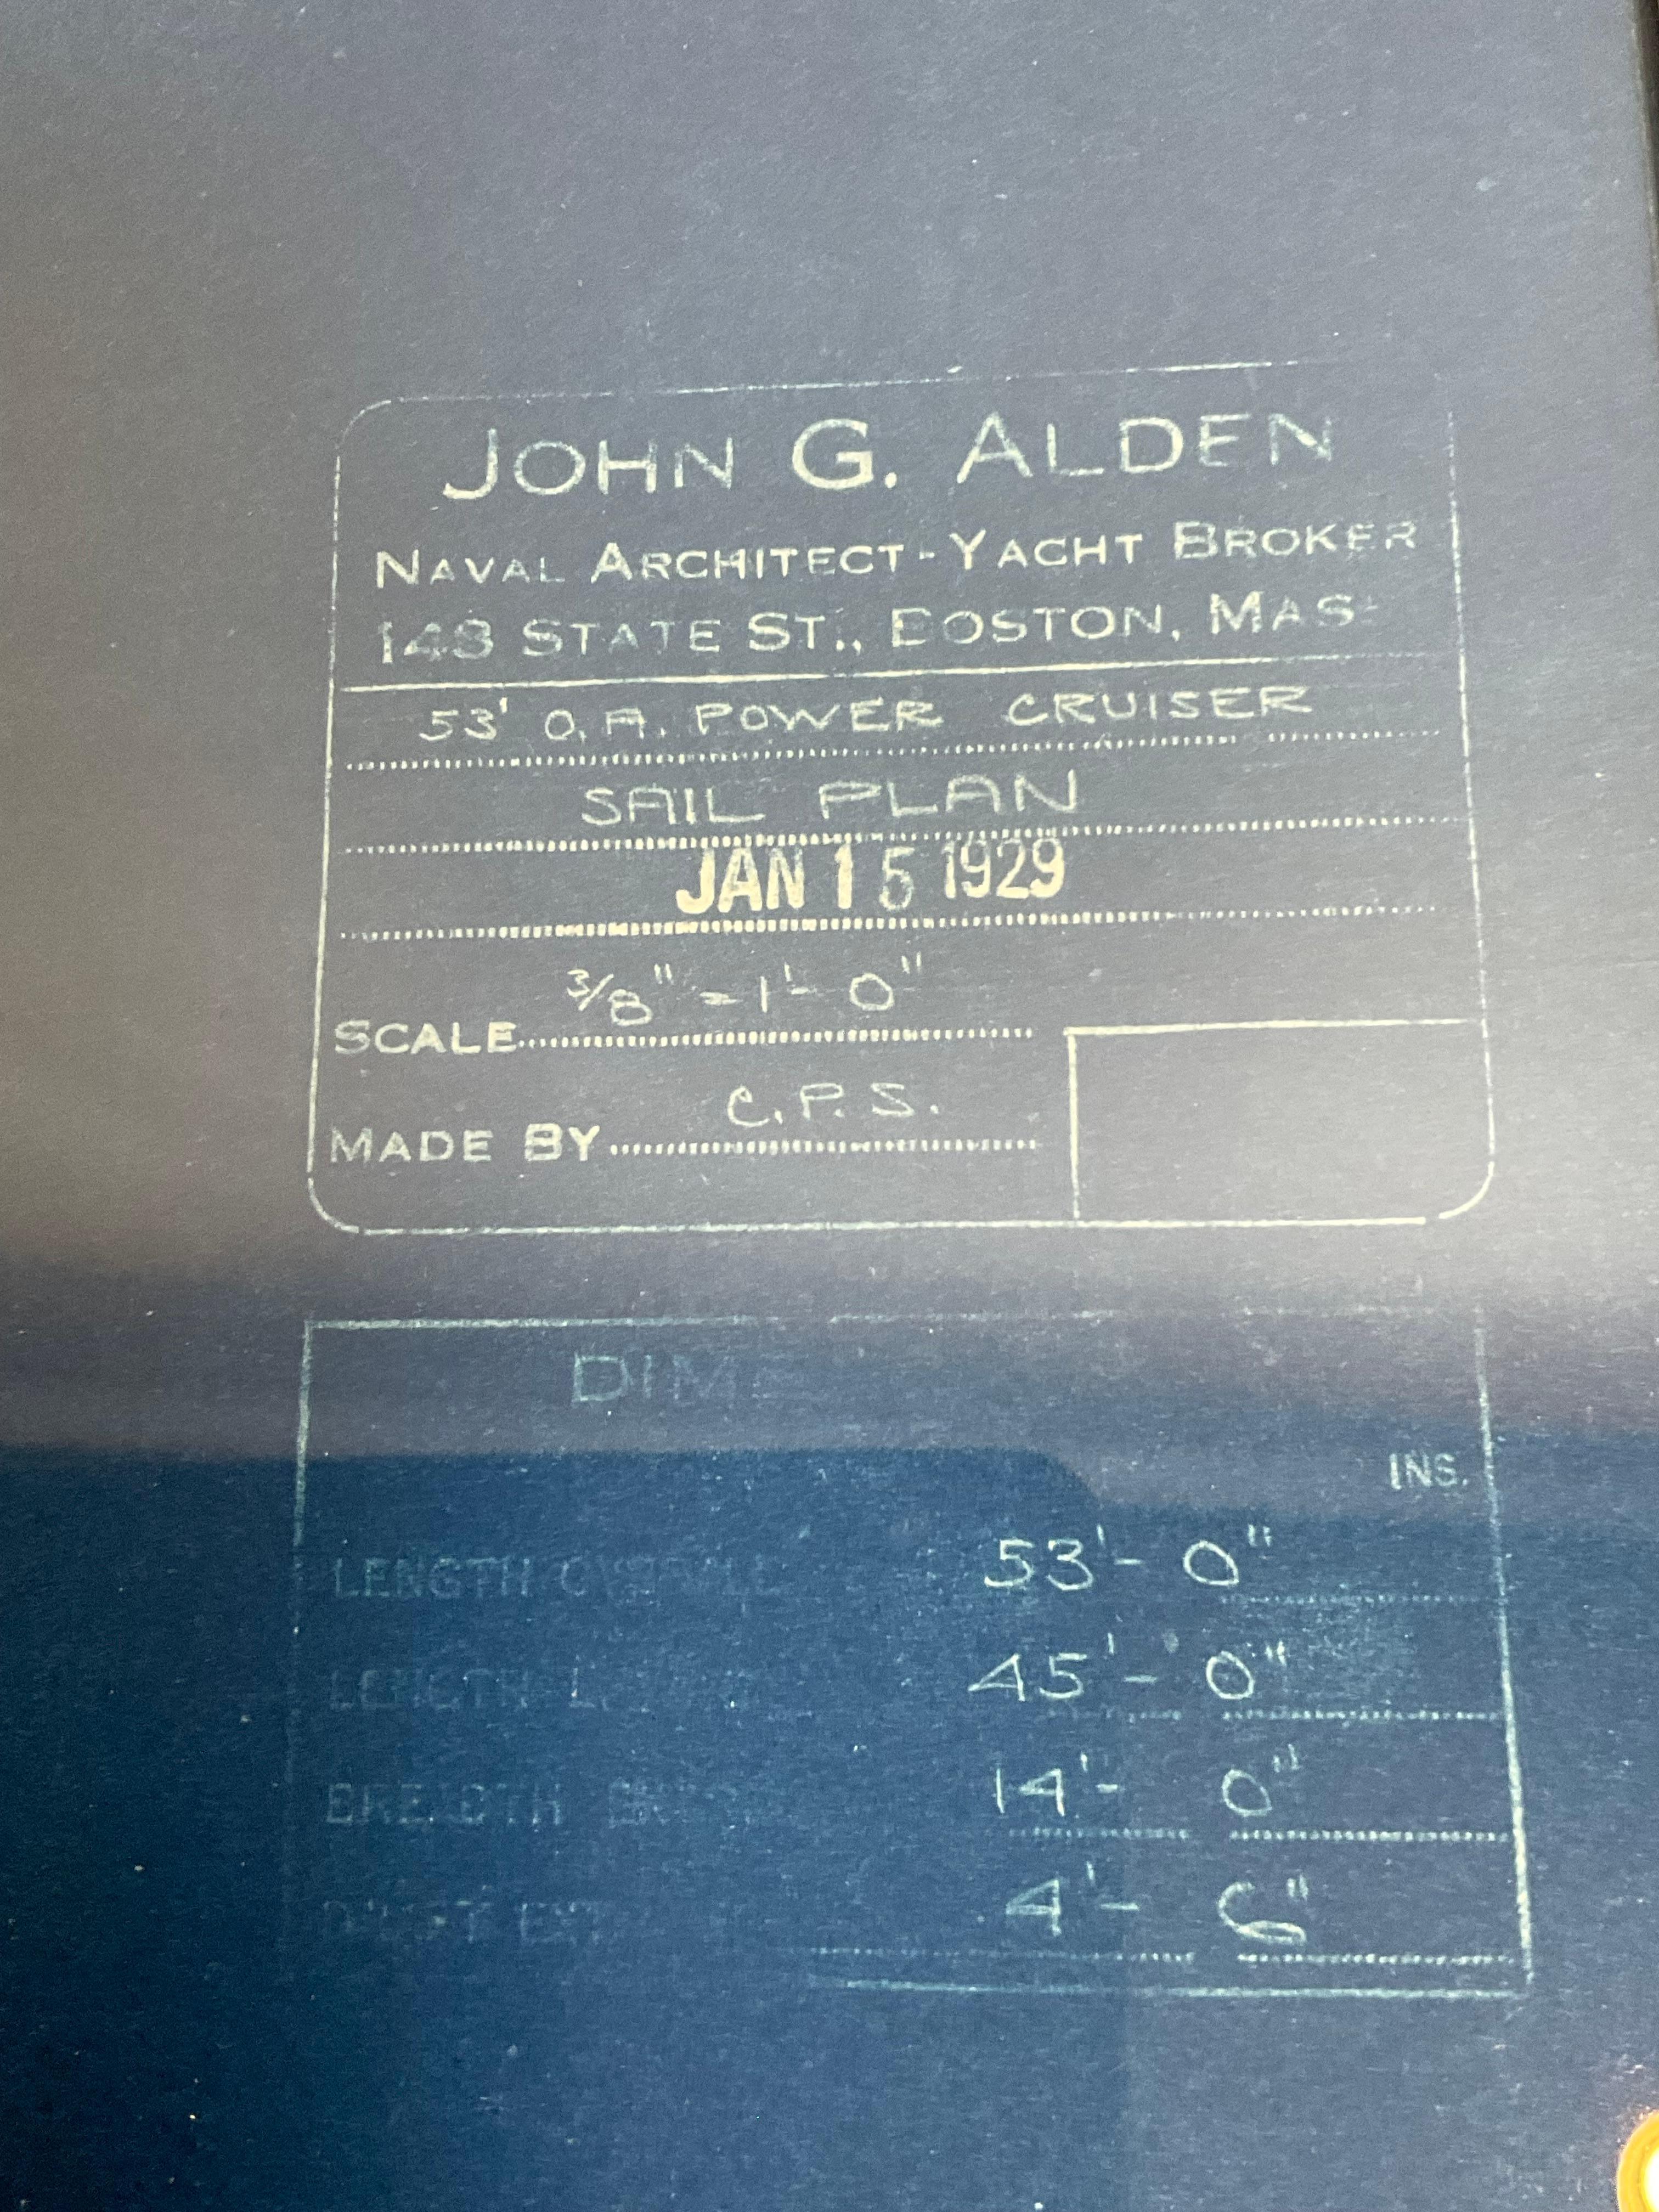 Early 20th Century Yacht Blueprint From John Alden